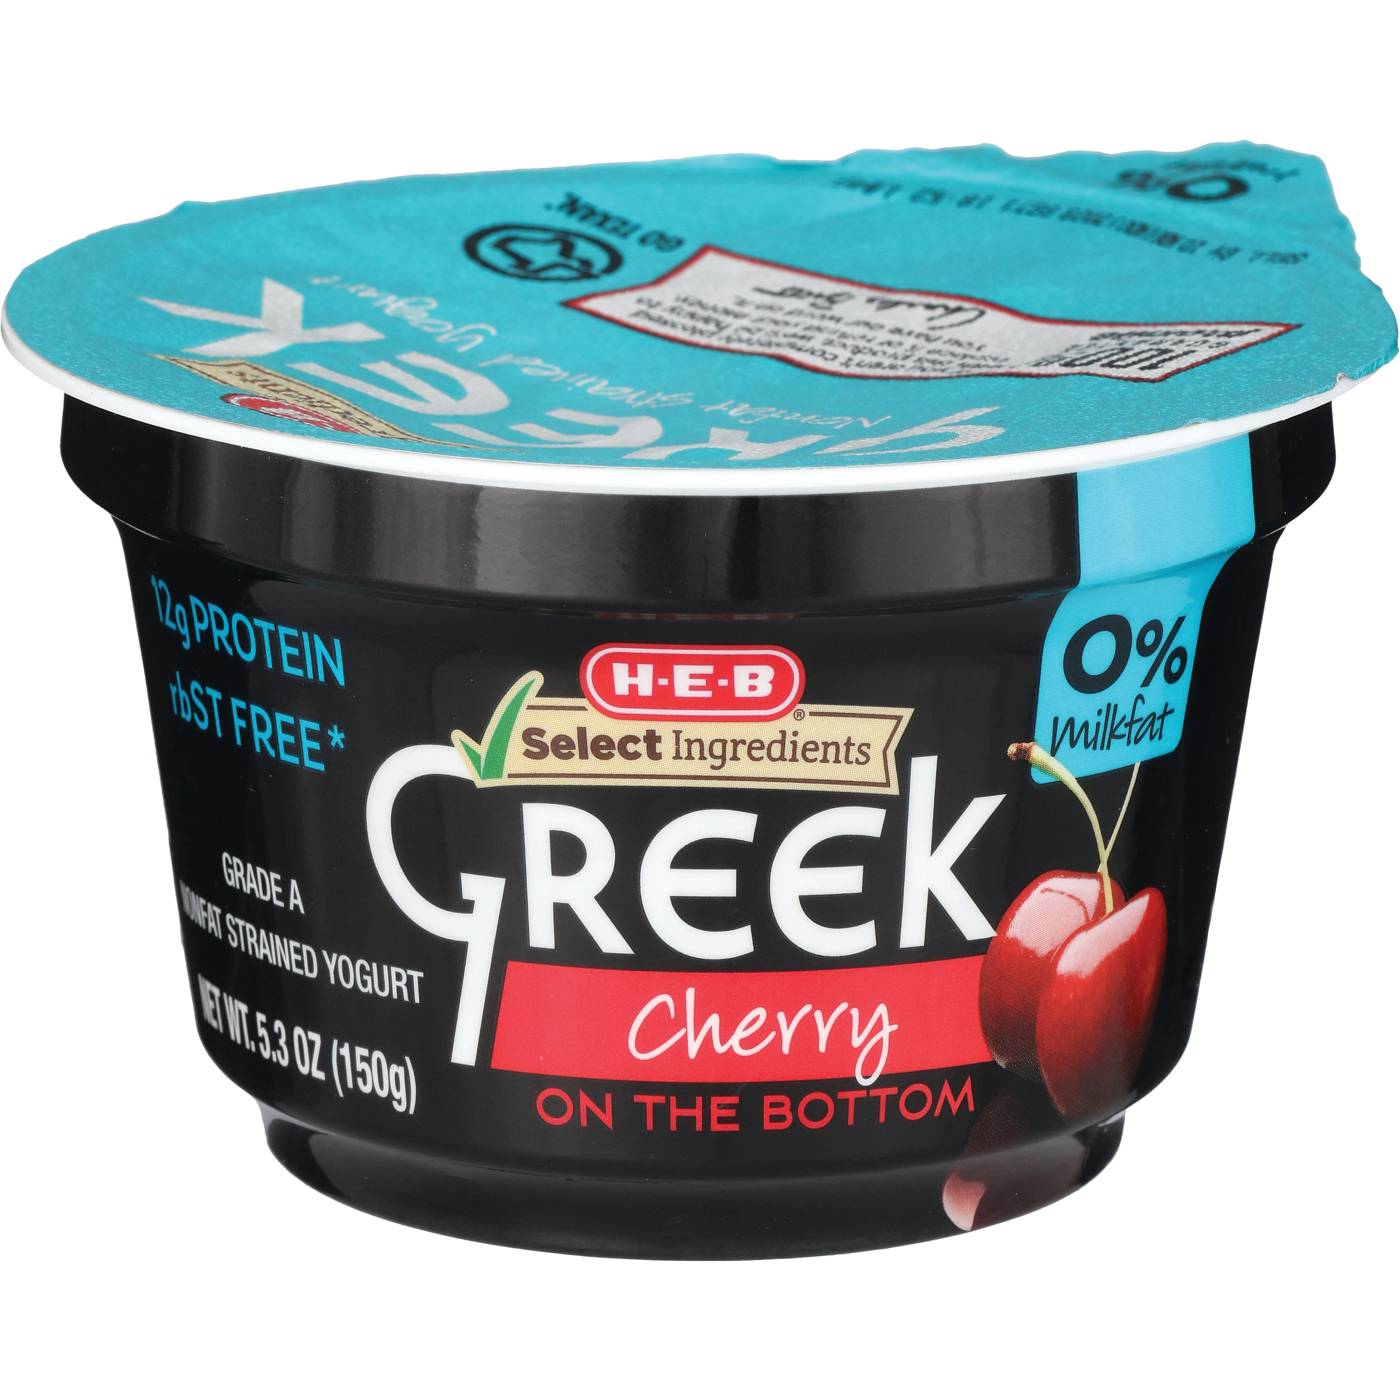 H-E-B Non-Fat Cherry Greek Yogurt; image 2 of 2